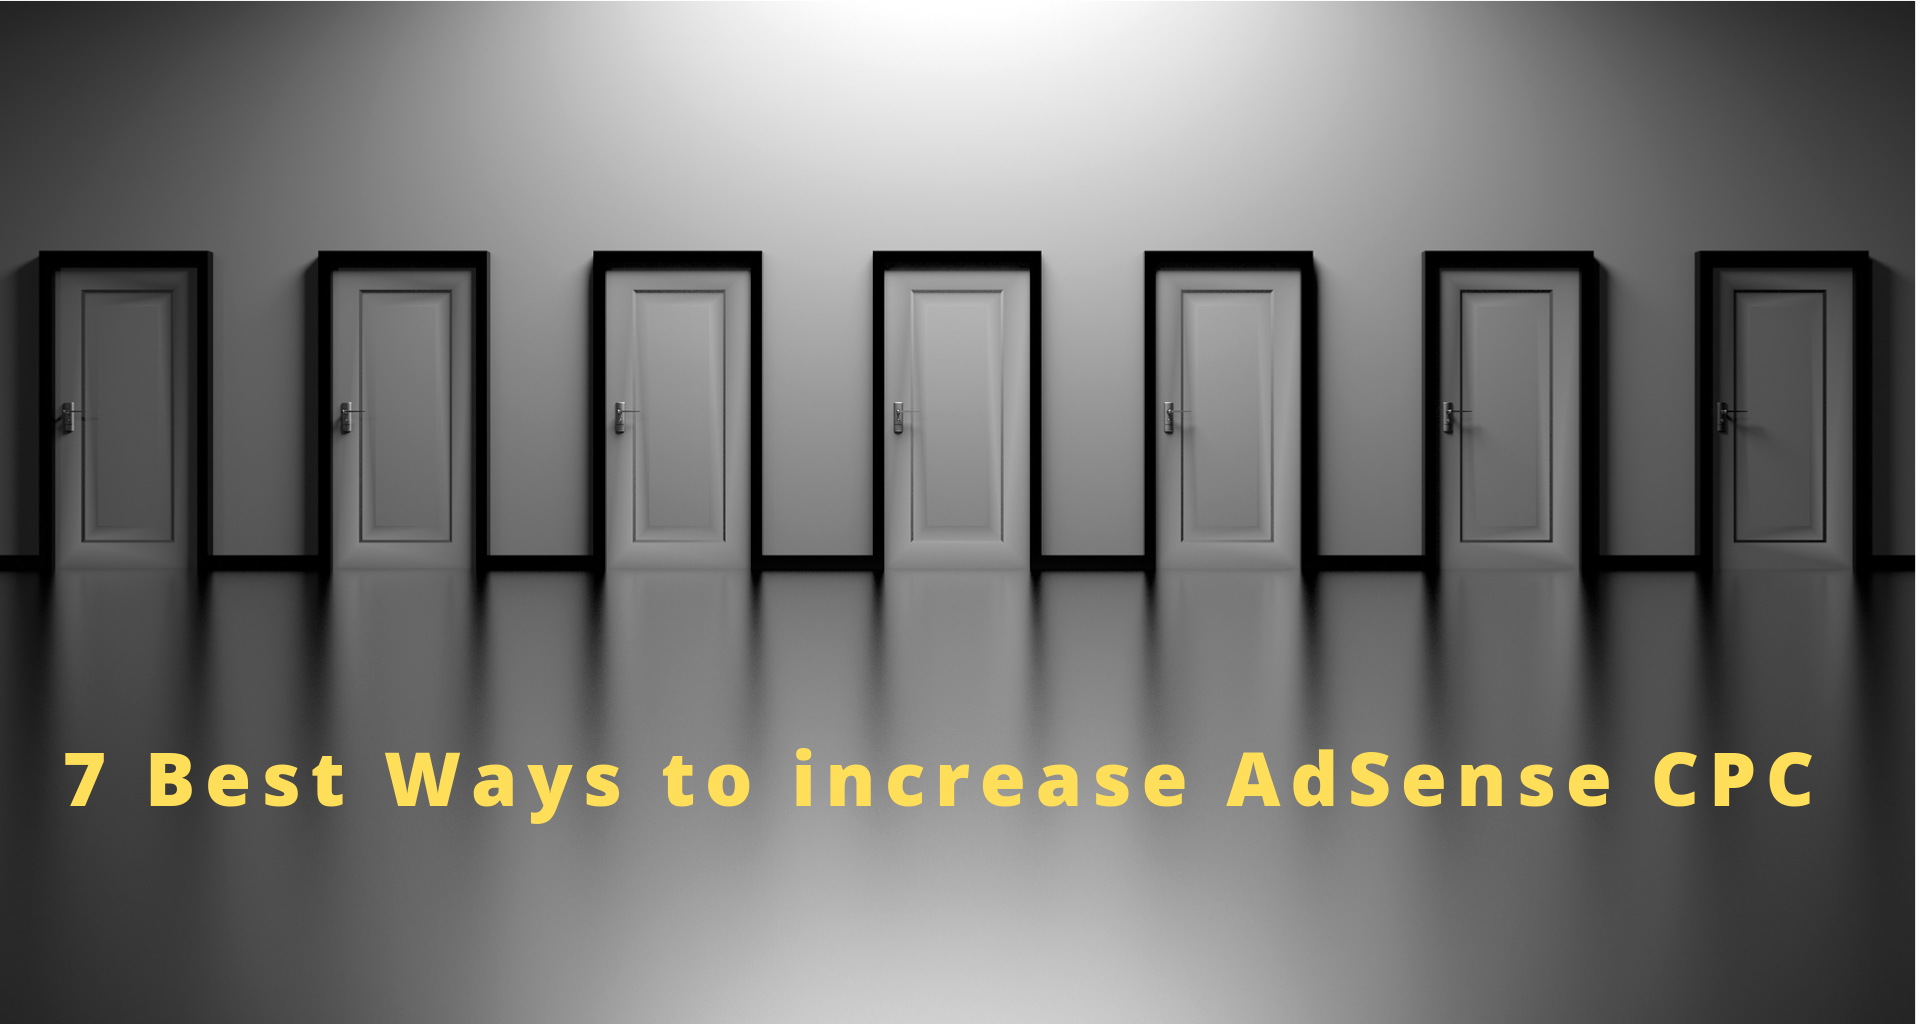 Seven Best ways to increase AdSense CPC